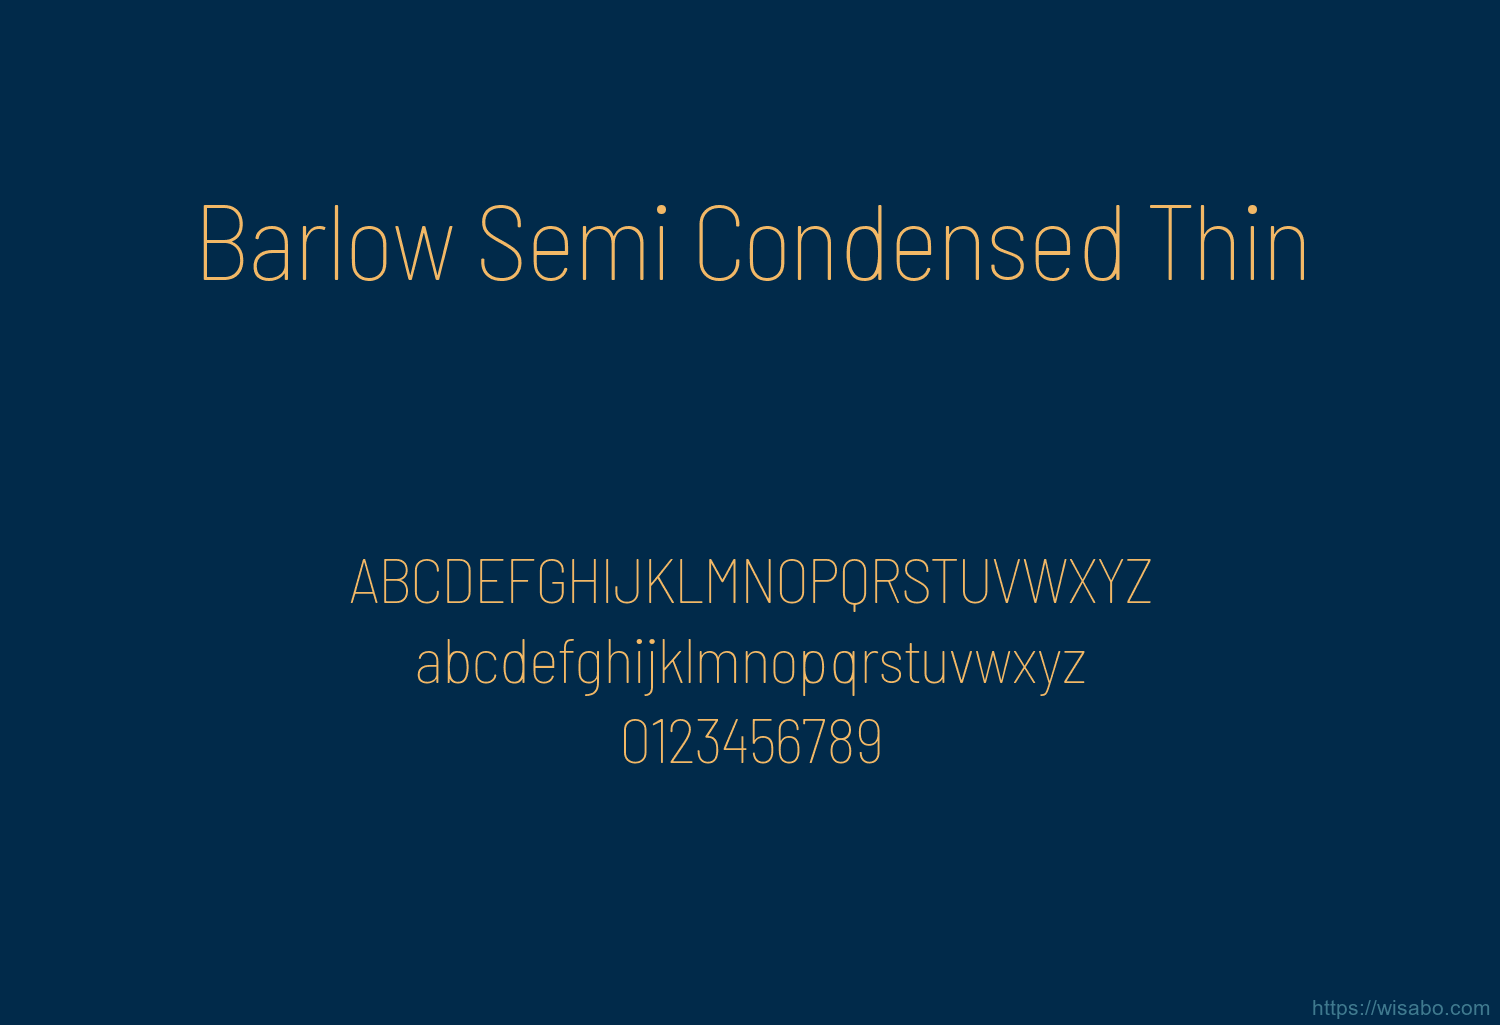 Barlow Semi Condensed Thin